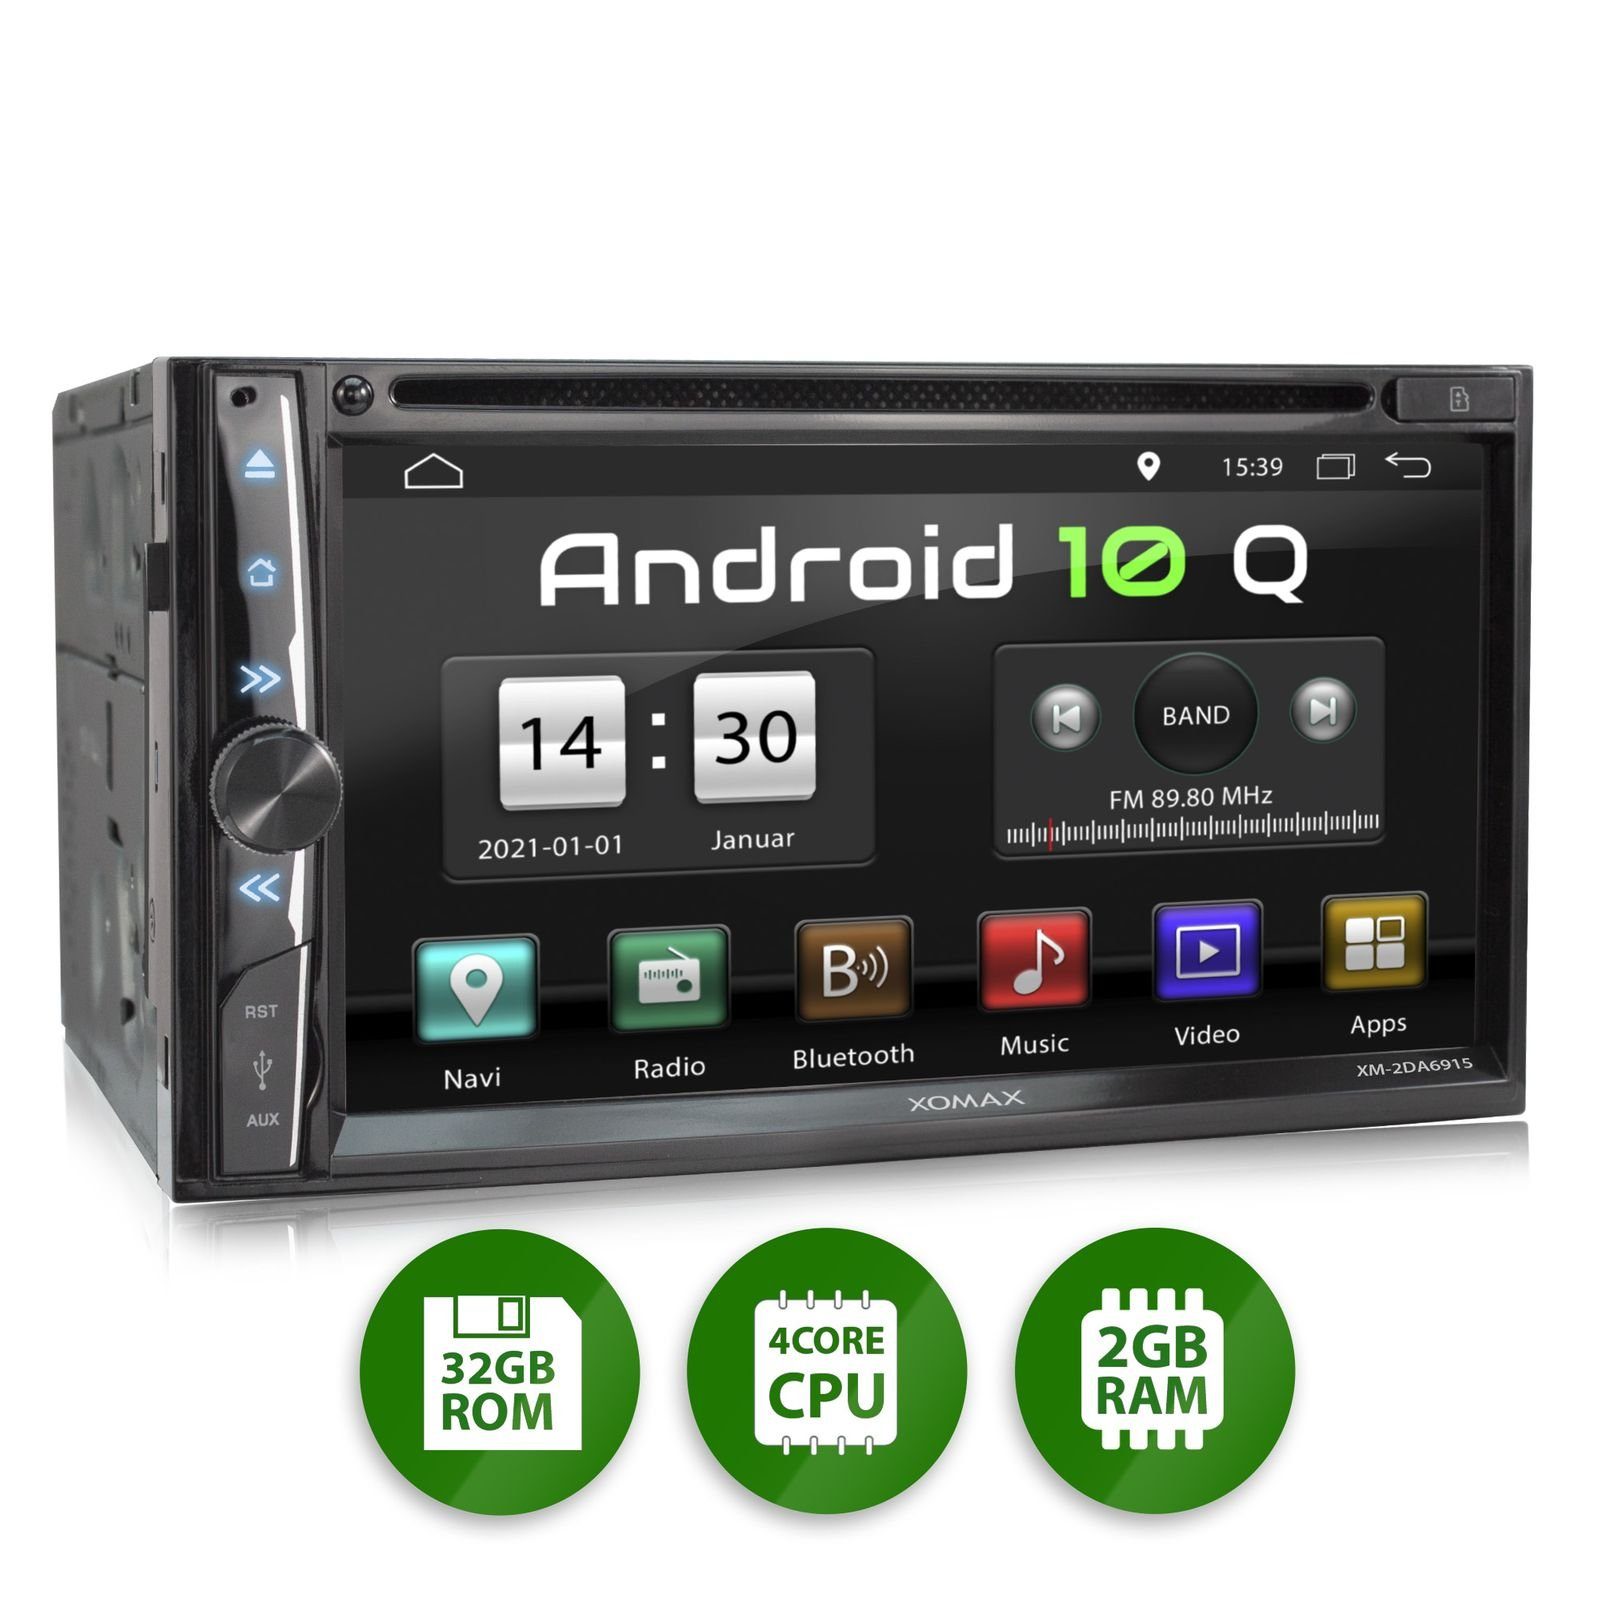 XOMAX XOMAX XM-2DA6915: 2DIN Autoradio mit Android 10 Navi 6,9 Zoll  Capacitive Touchscreen Monitor, Bluetooth, SD, USB, DVD, CD Autoradio